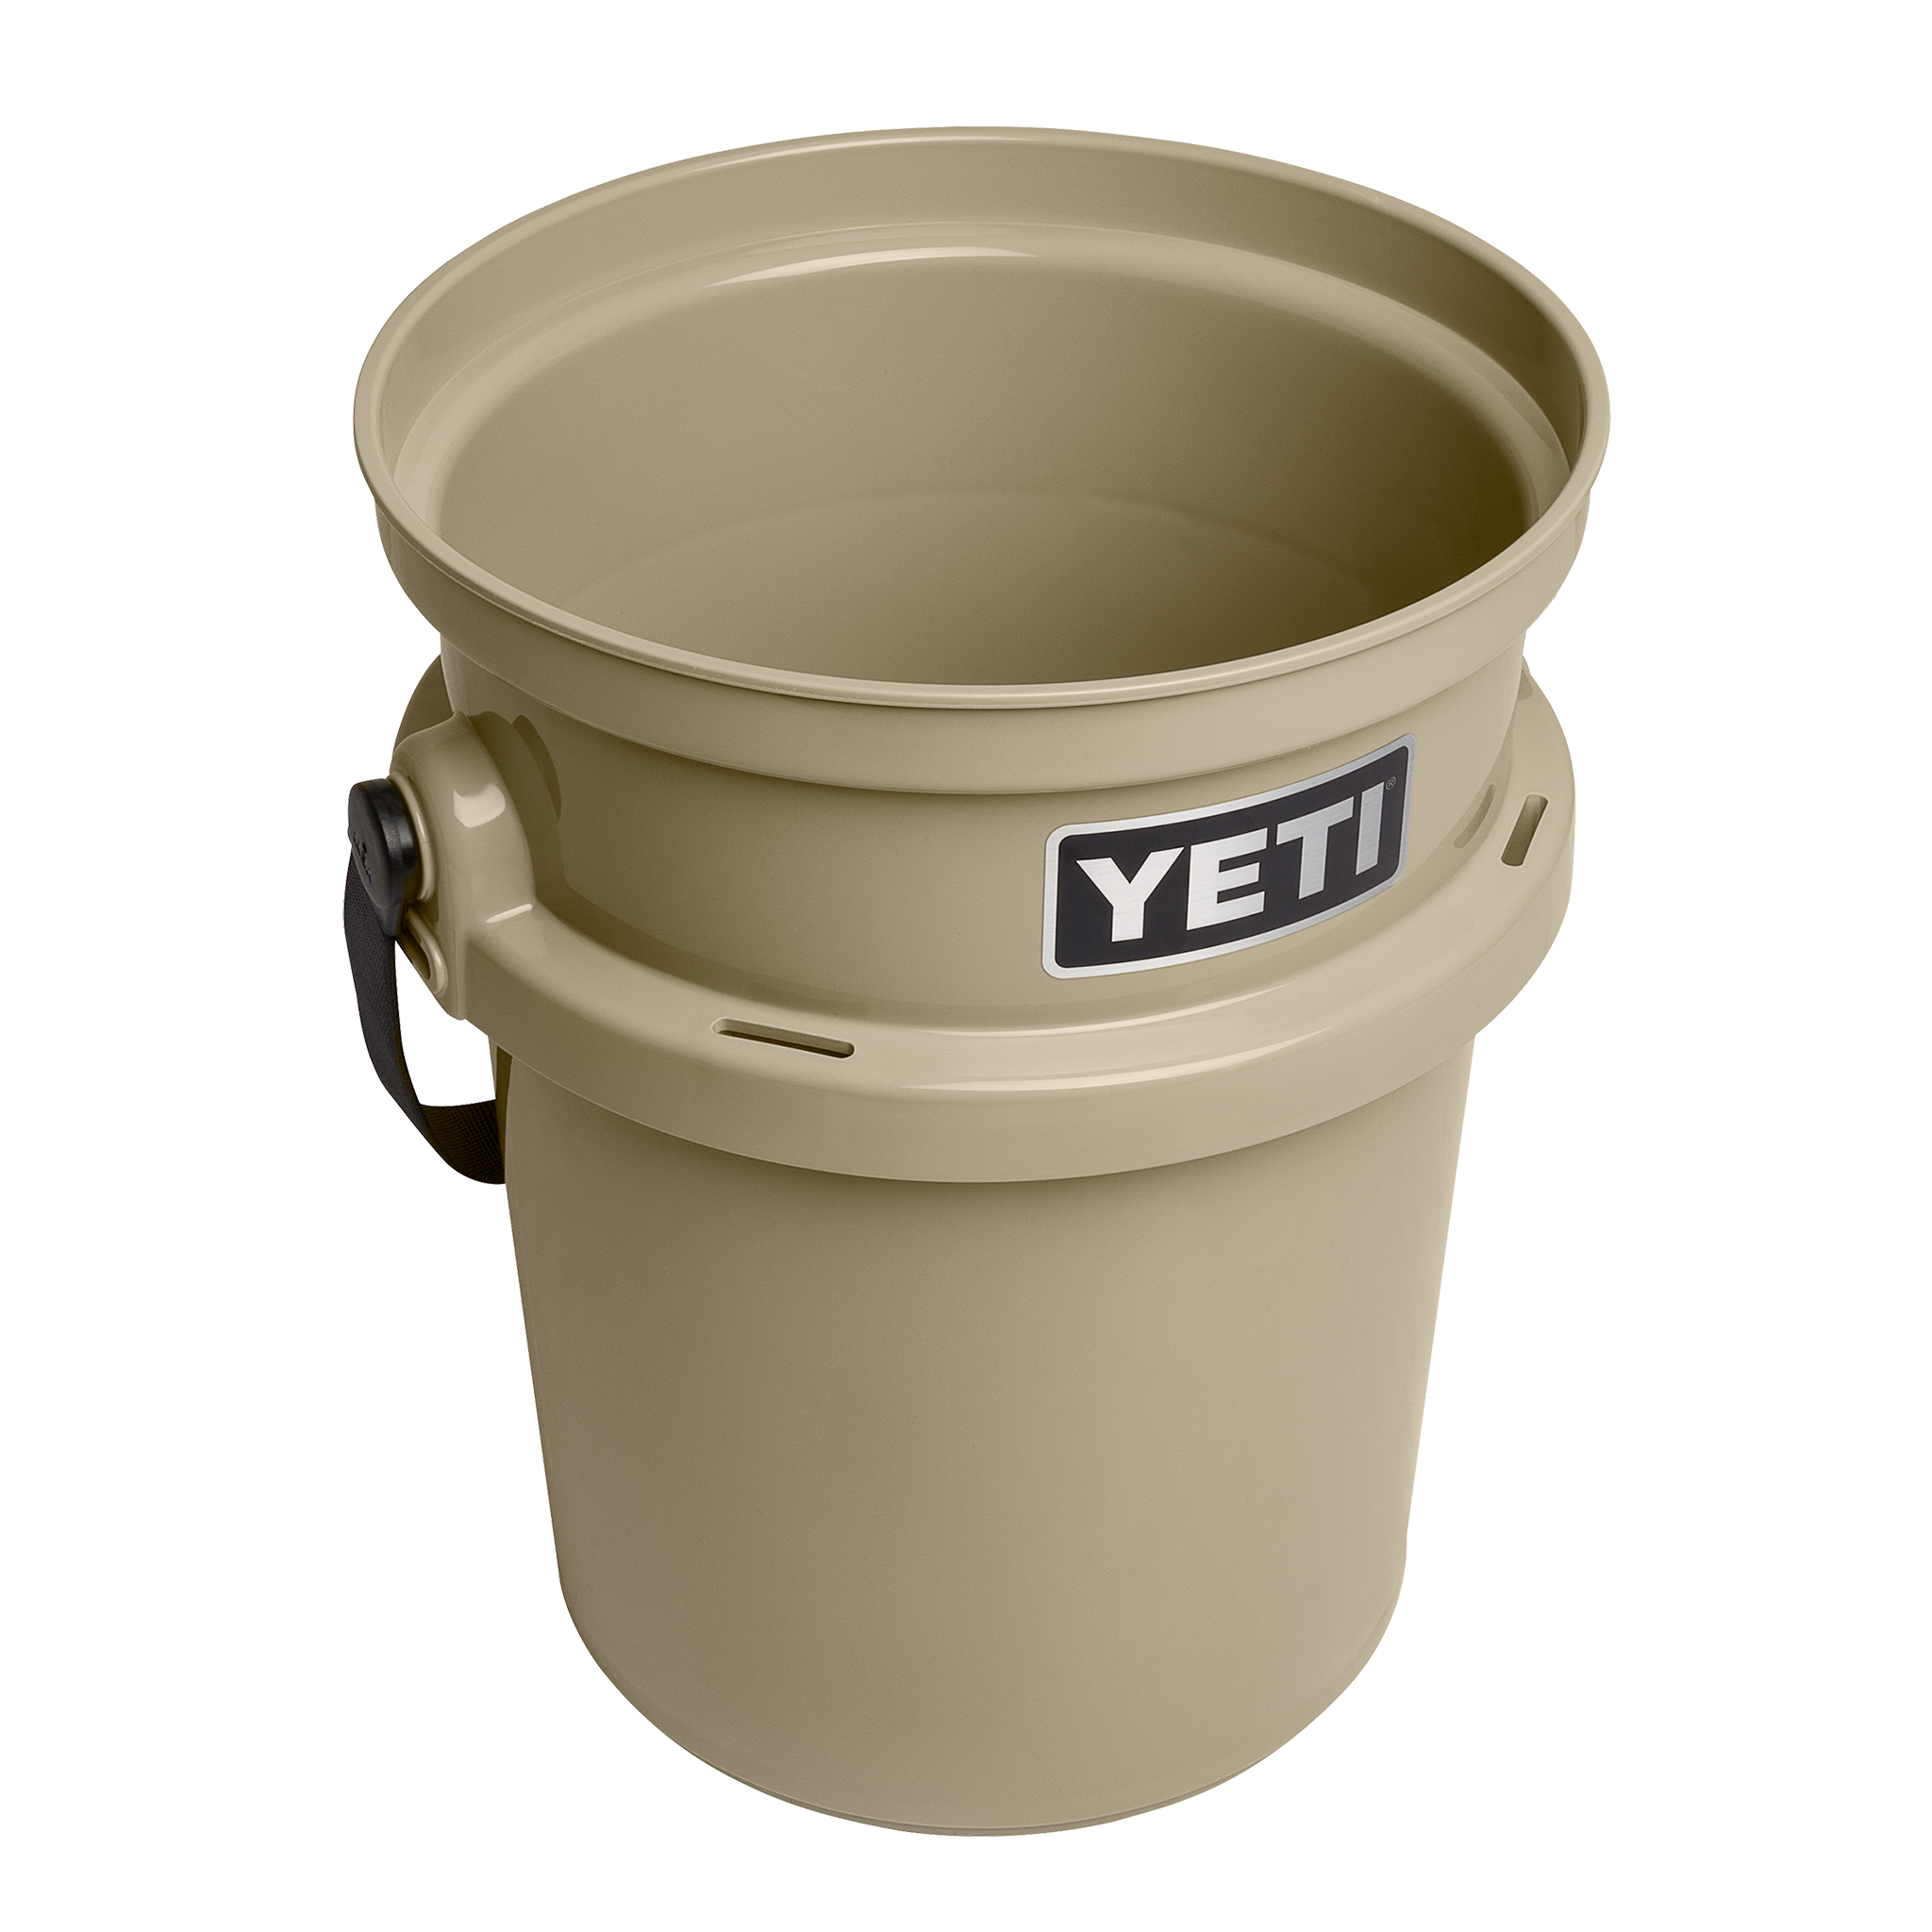 YETI / Loadout 5-Gallon Bucket - Harvest Red